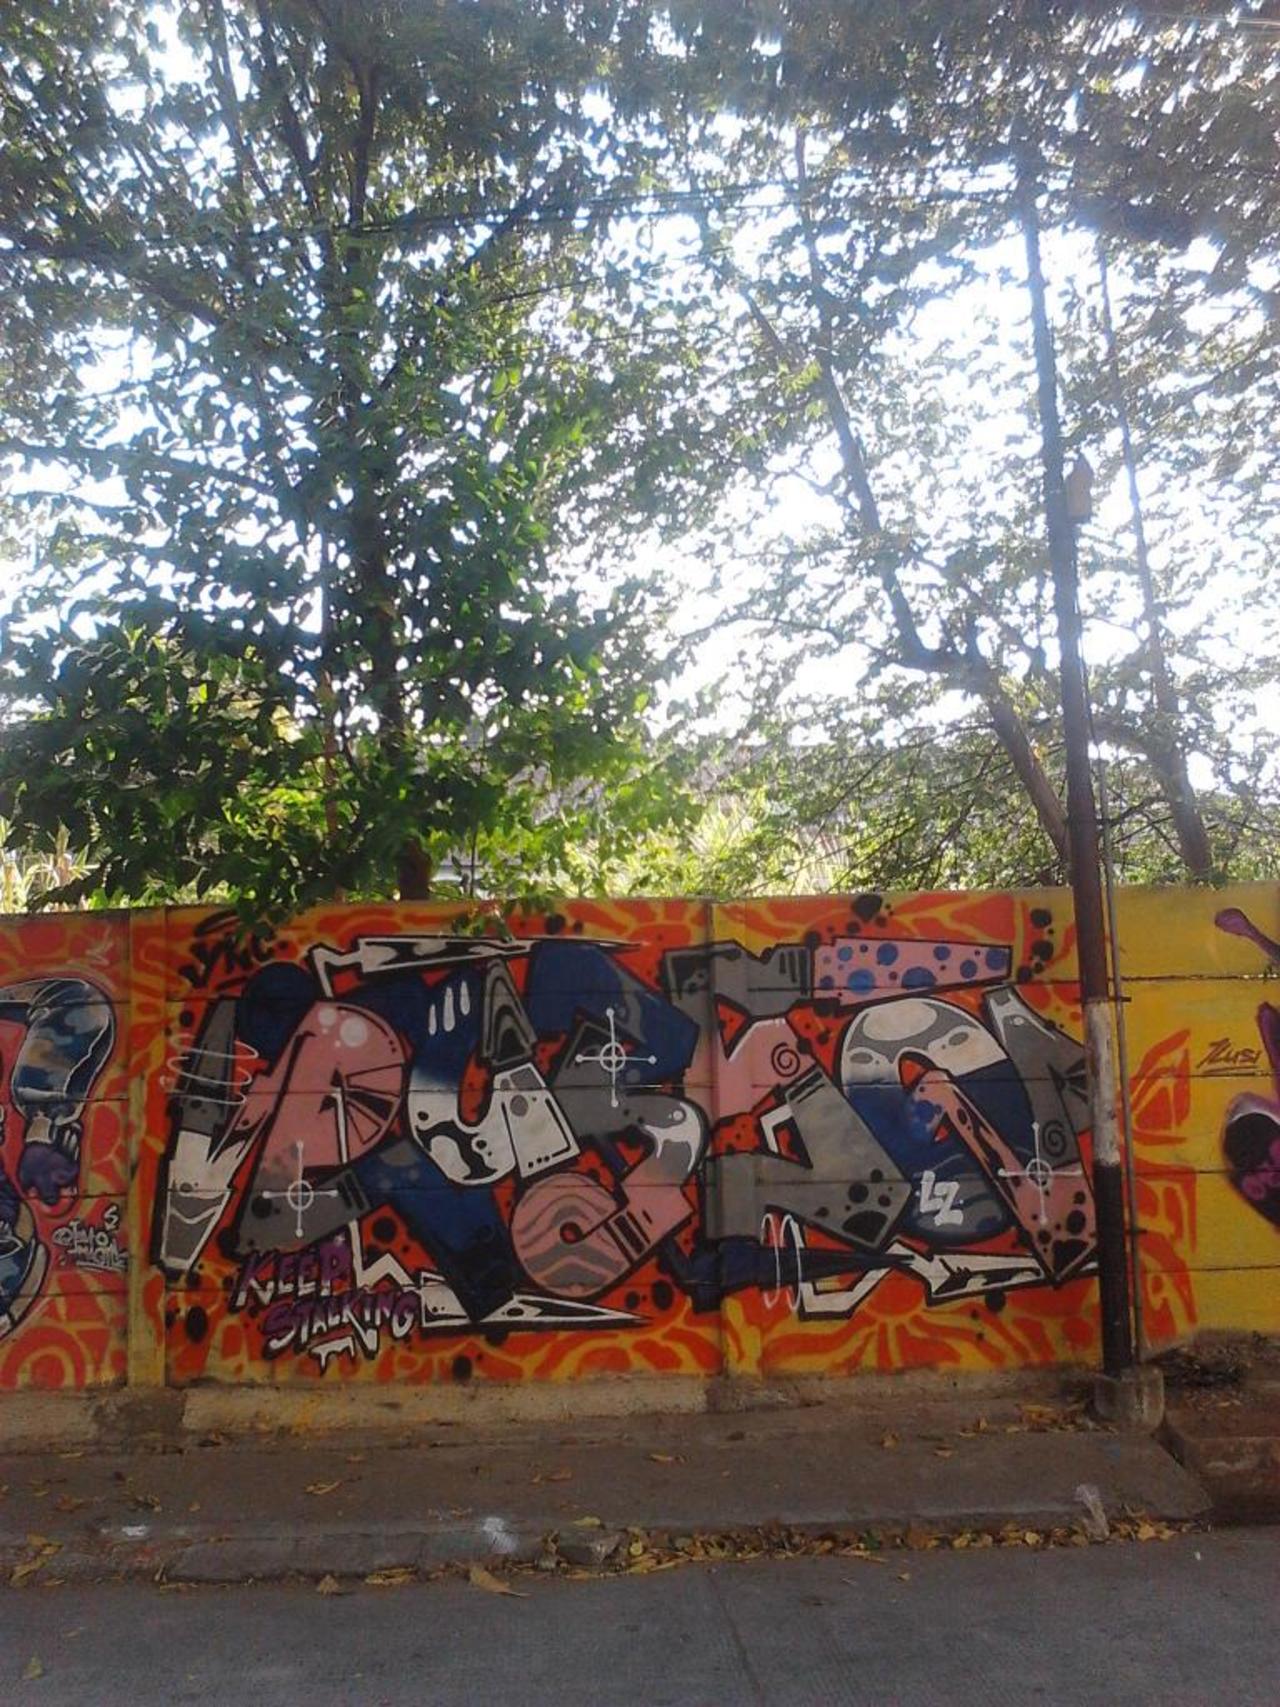 Selamat pagi Semarang! Rubso KS LZ! #graffiti #streetart . Cc: @rudethrubs @I_S_A_D @INA_Walls @HipHopVandals http://t.co/jCU5B0W9al